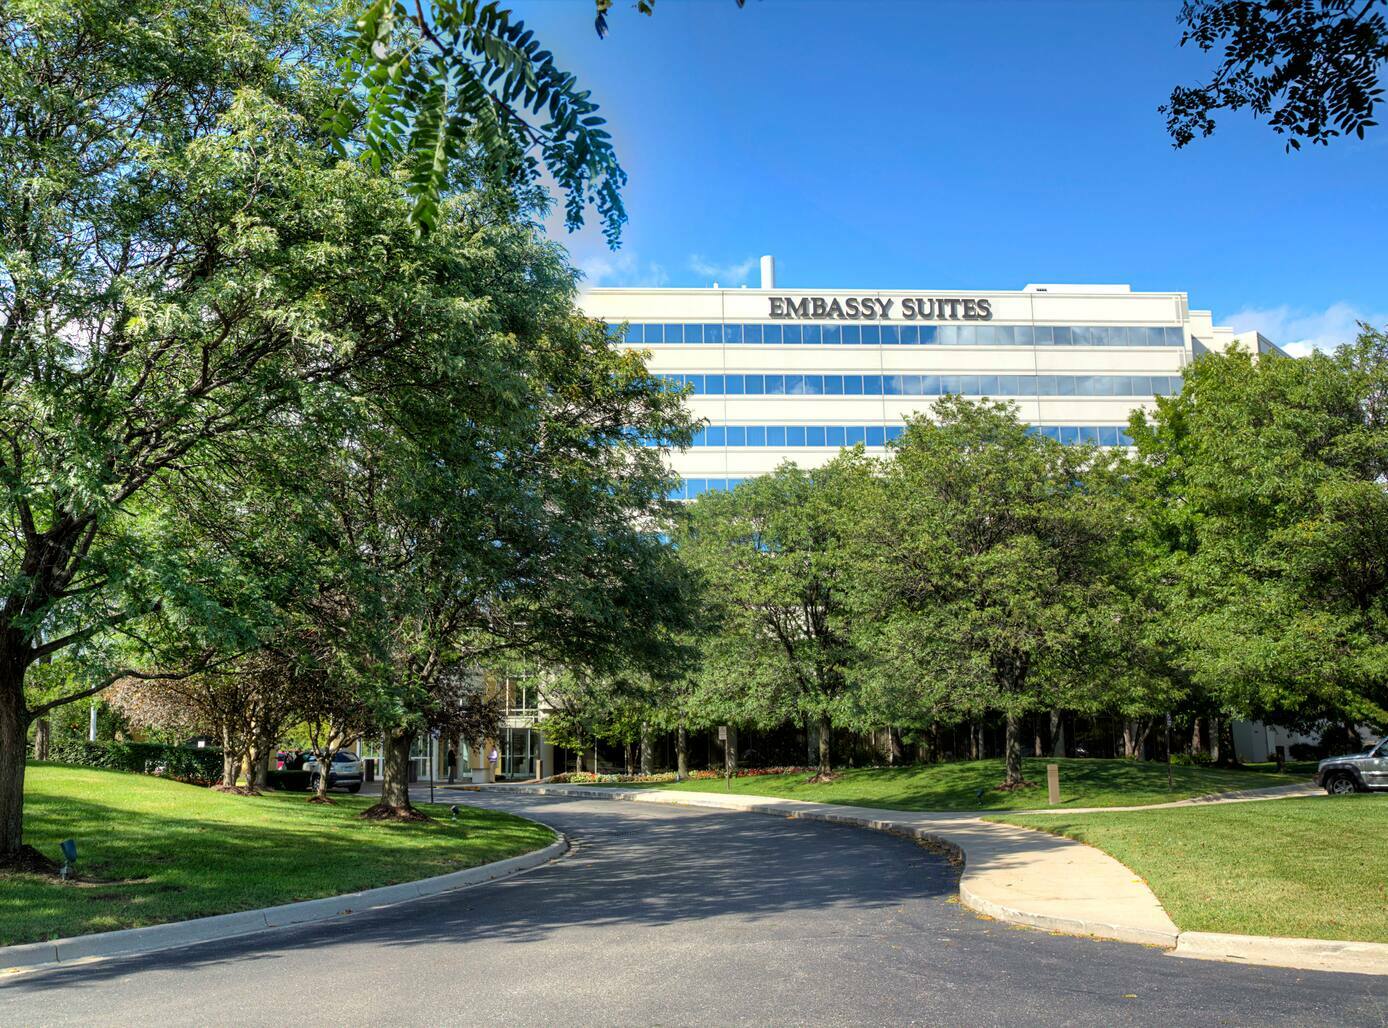 Photo of Embassy Suites by Hilton Detroit Troy Auburn Hills, Troy, MI